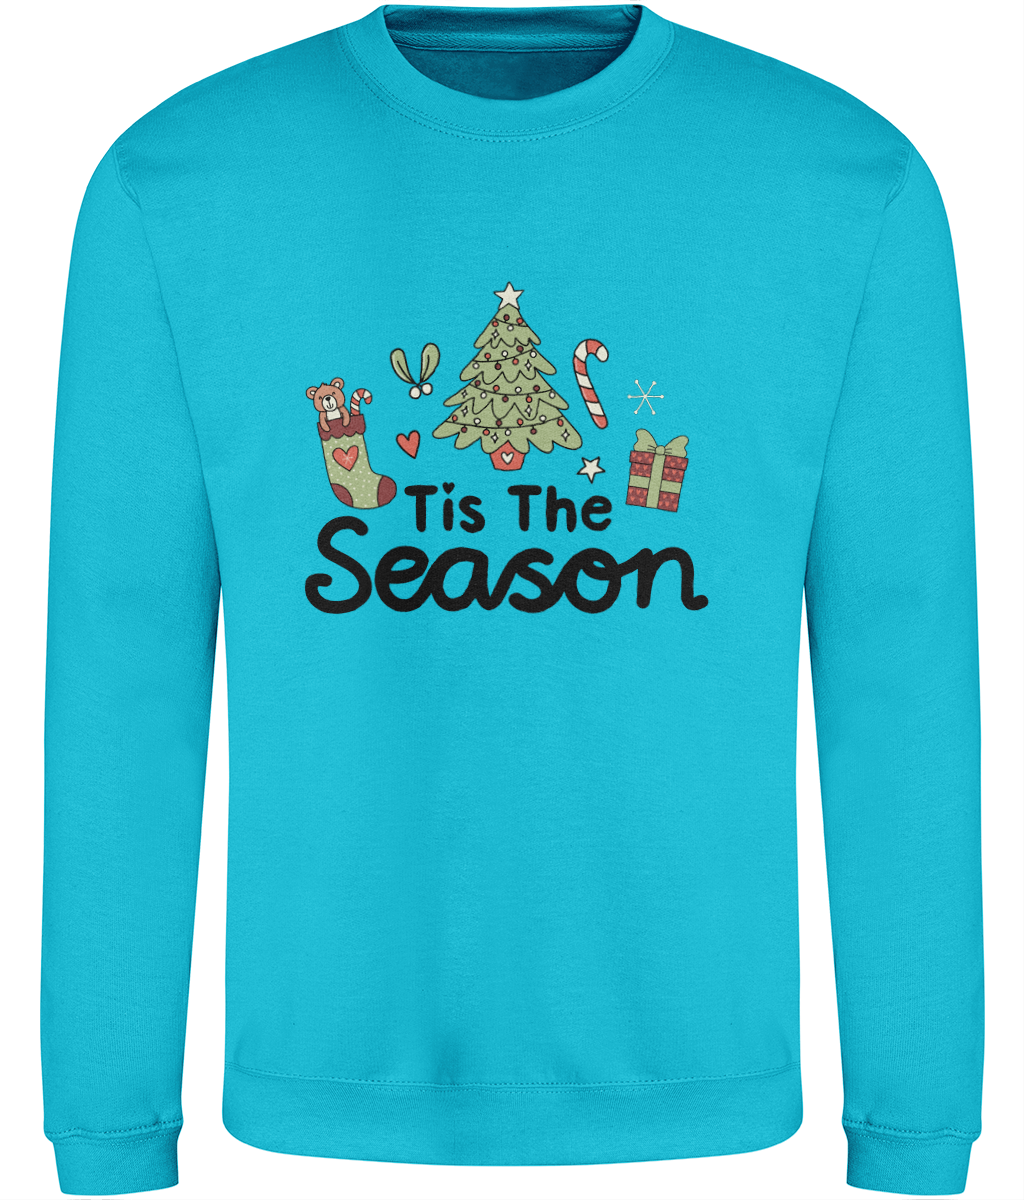 Tis The Season - Adult Sweatshirt - Light Multi Colour Available